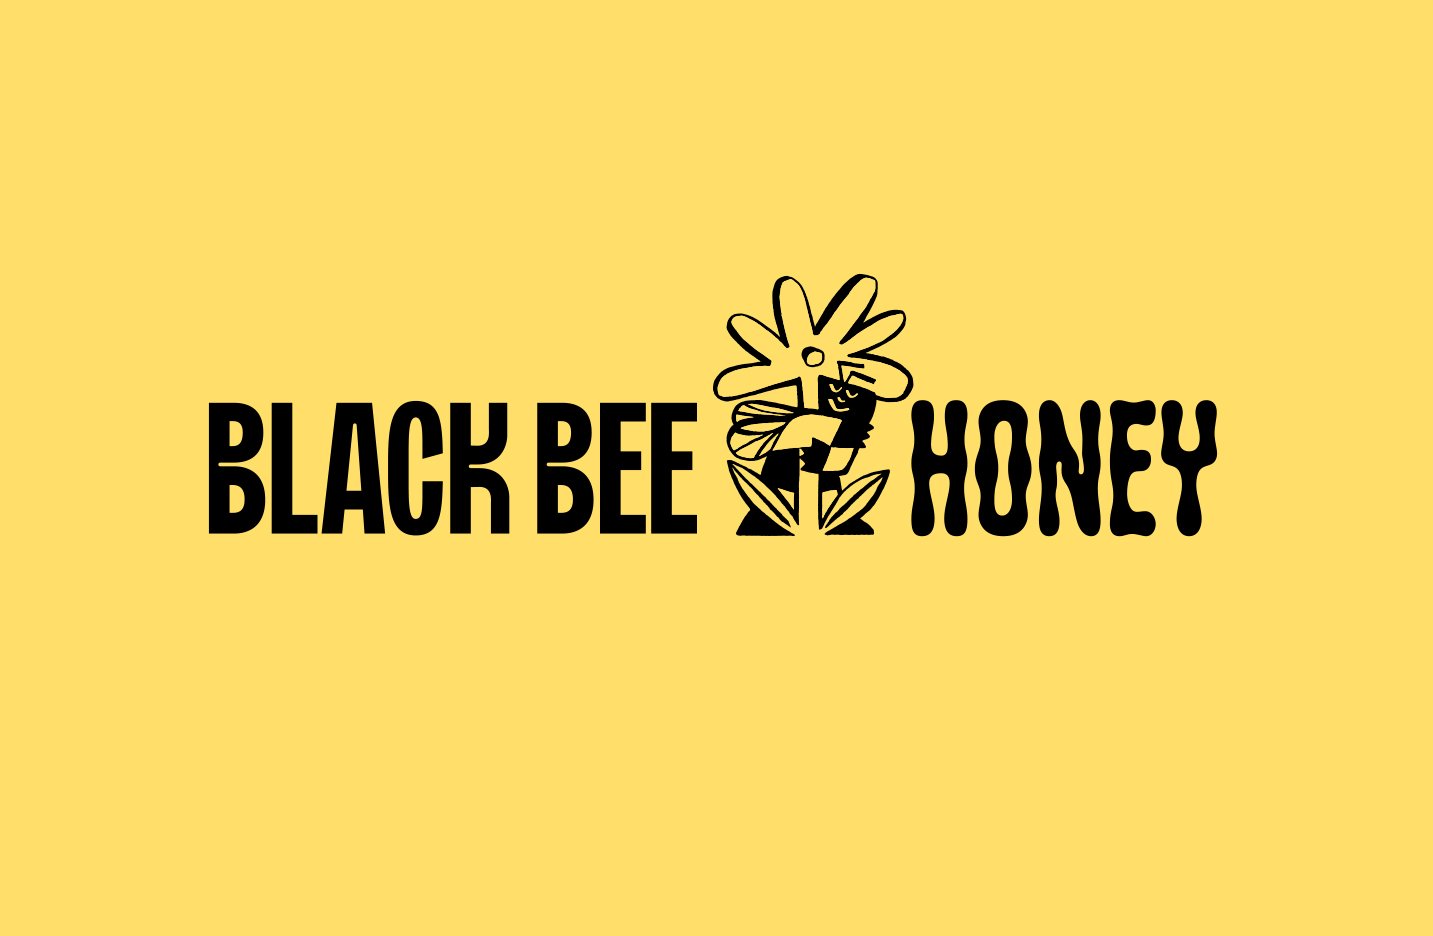 Logo, branding and packaging for British single origin Black Bee Honey designed by OMSE